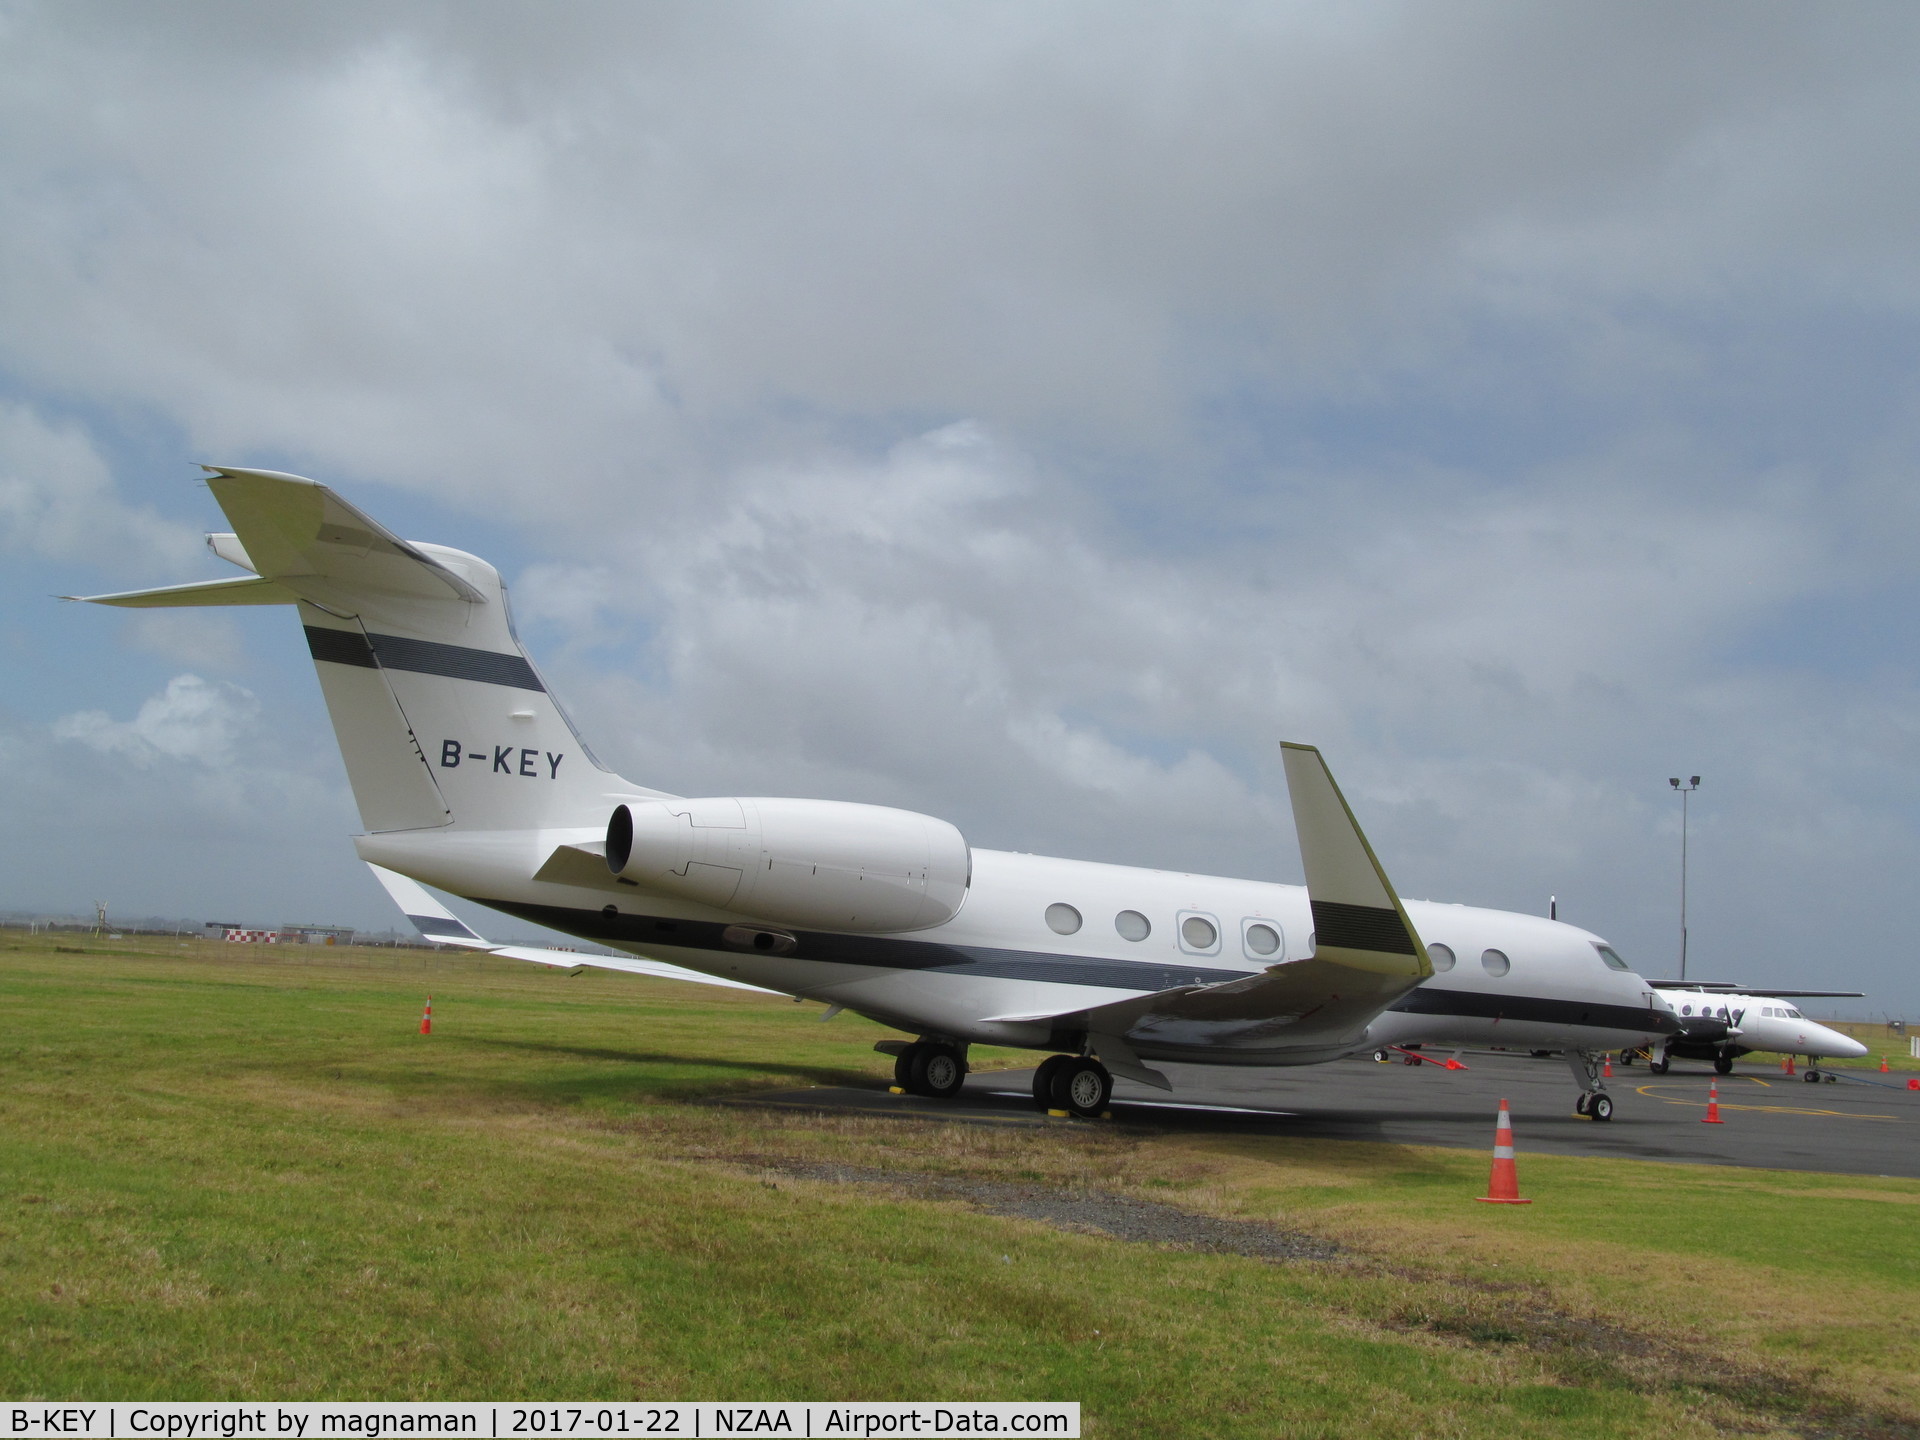 B-KEY, 2014 Gulfstream Aerospace G650 (G-VI) C/N 6098, at AKL - been a few times before